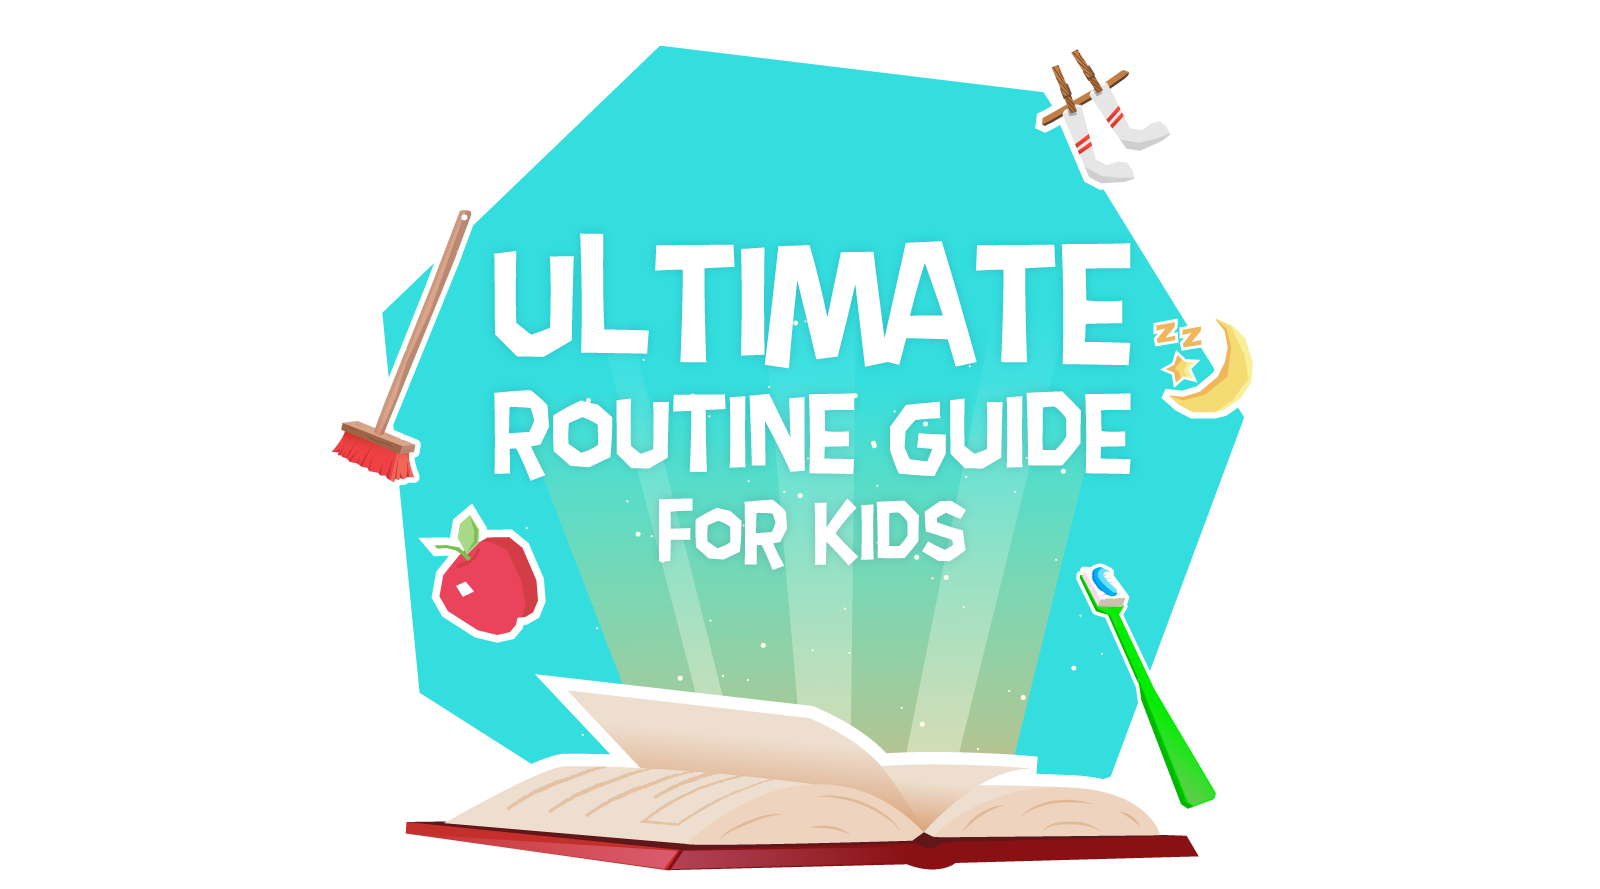 Ultimate routine guide